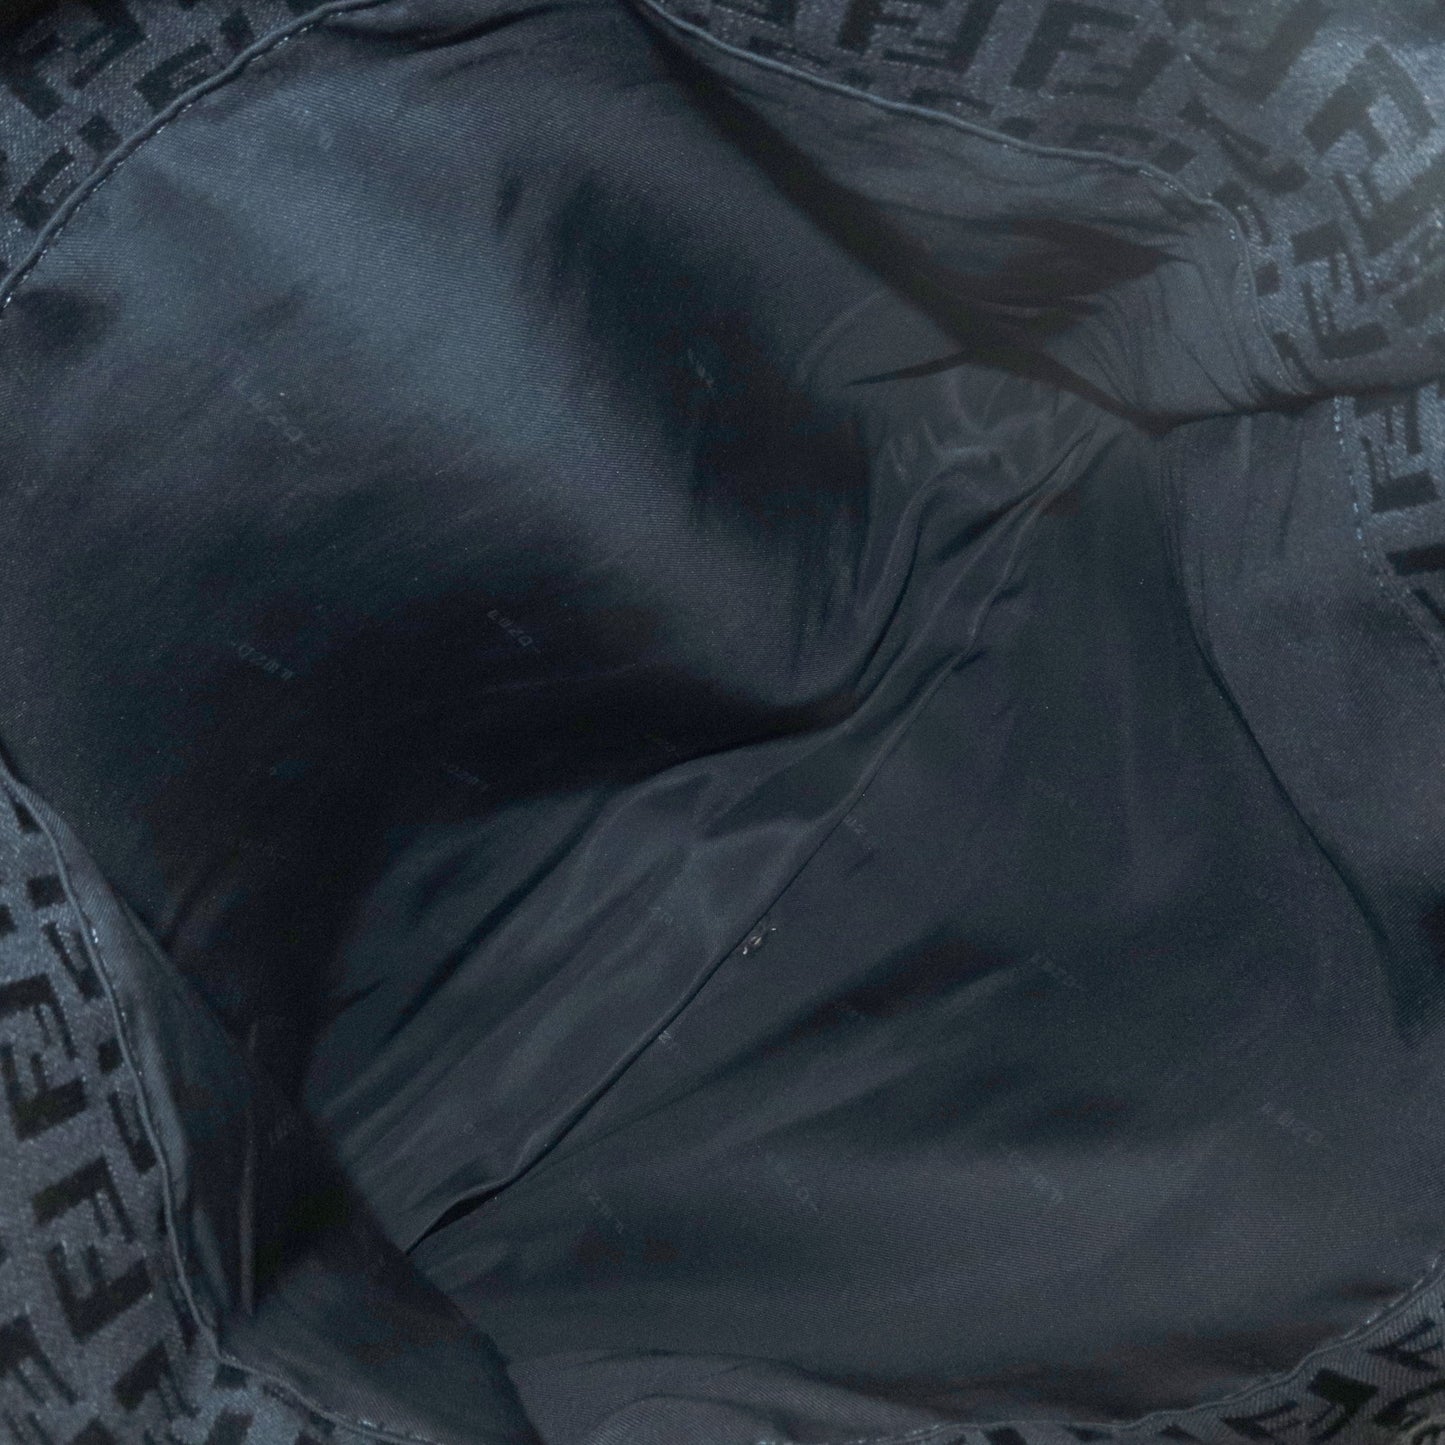 FENDI Zucchino Canvas Leather Hand Bag Tote Bag Black 8BH133